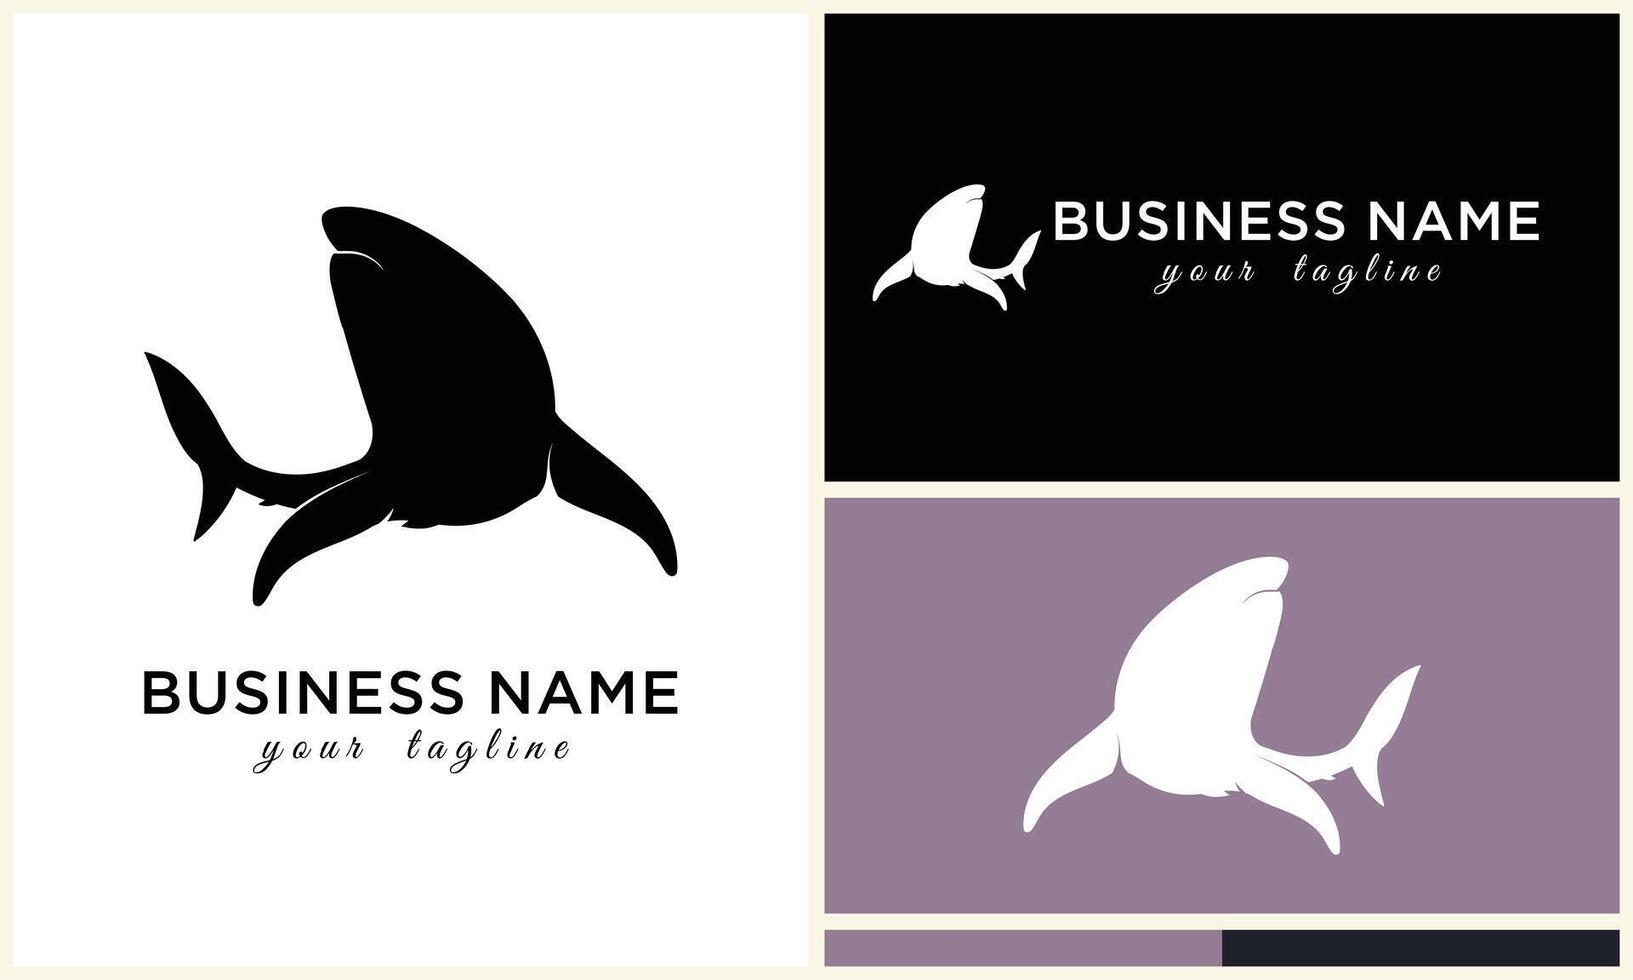 silhouette shark vector logo template